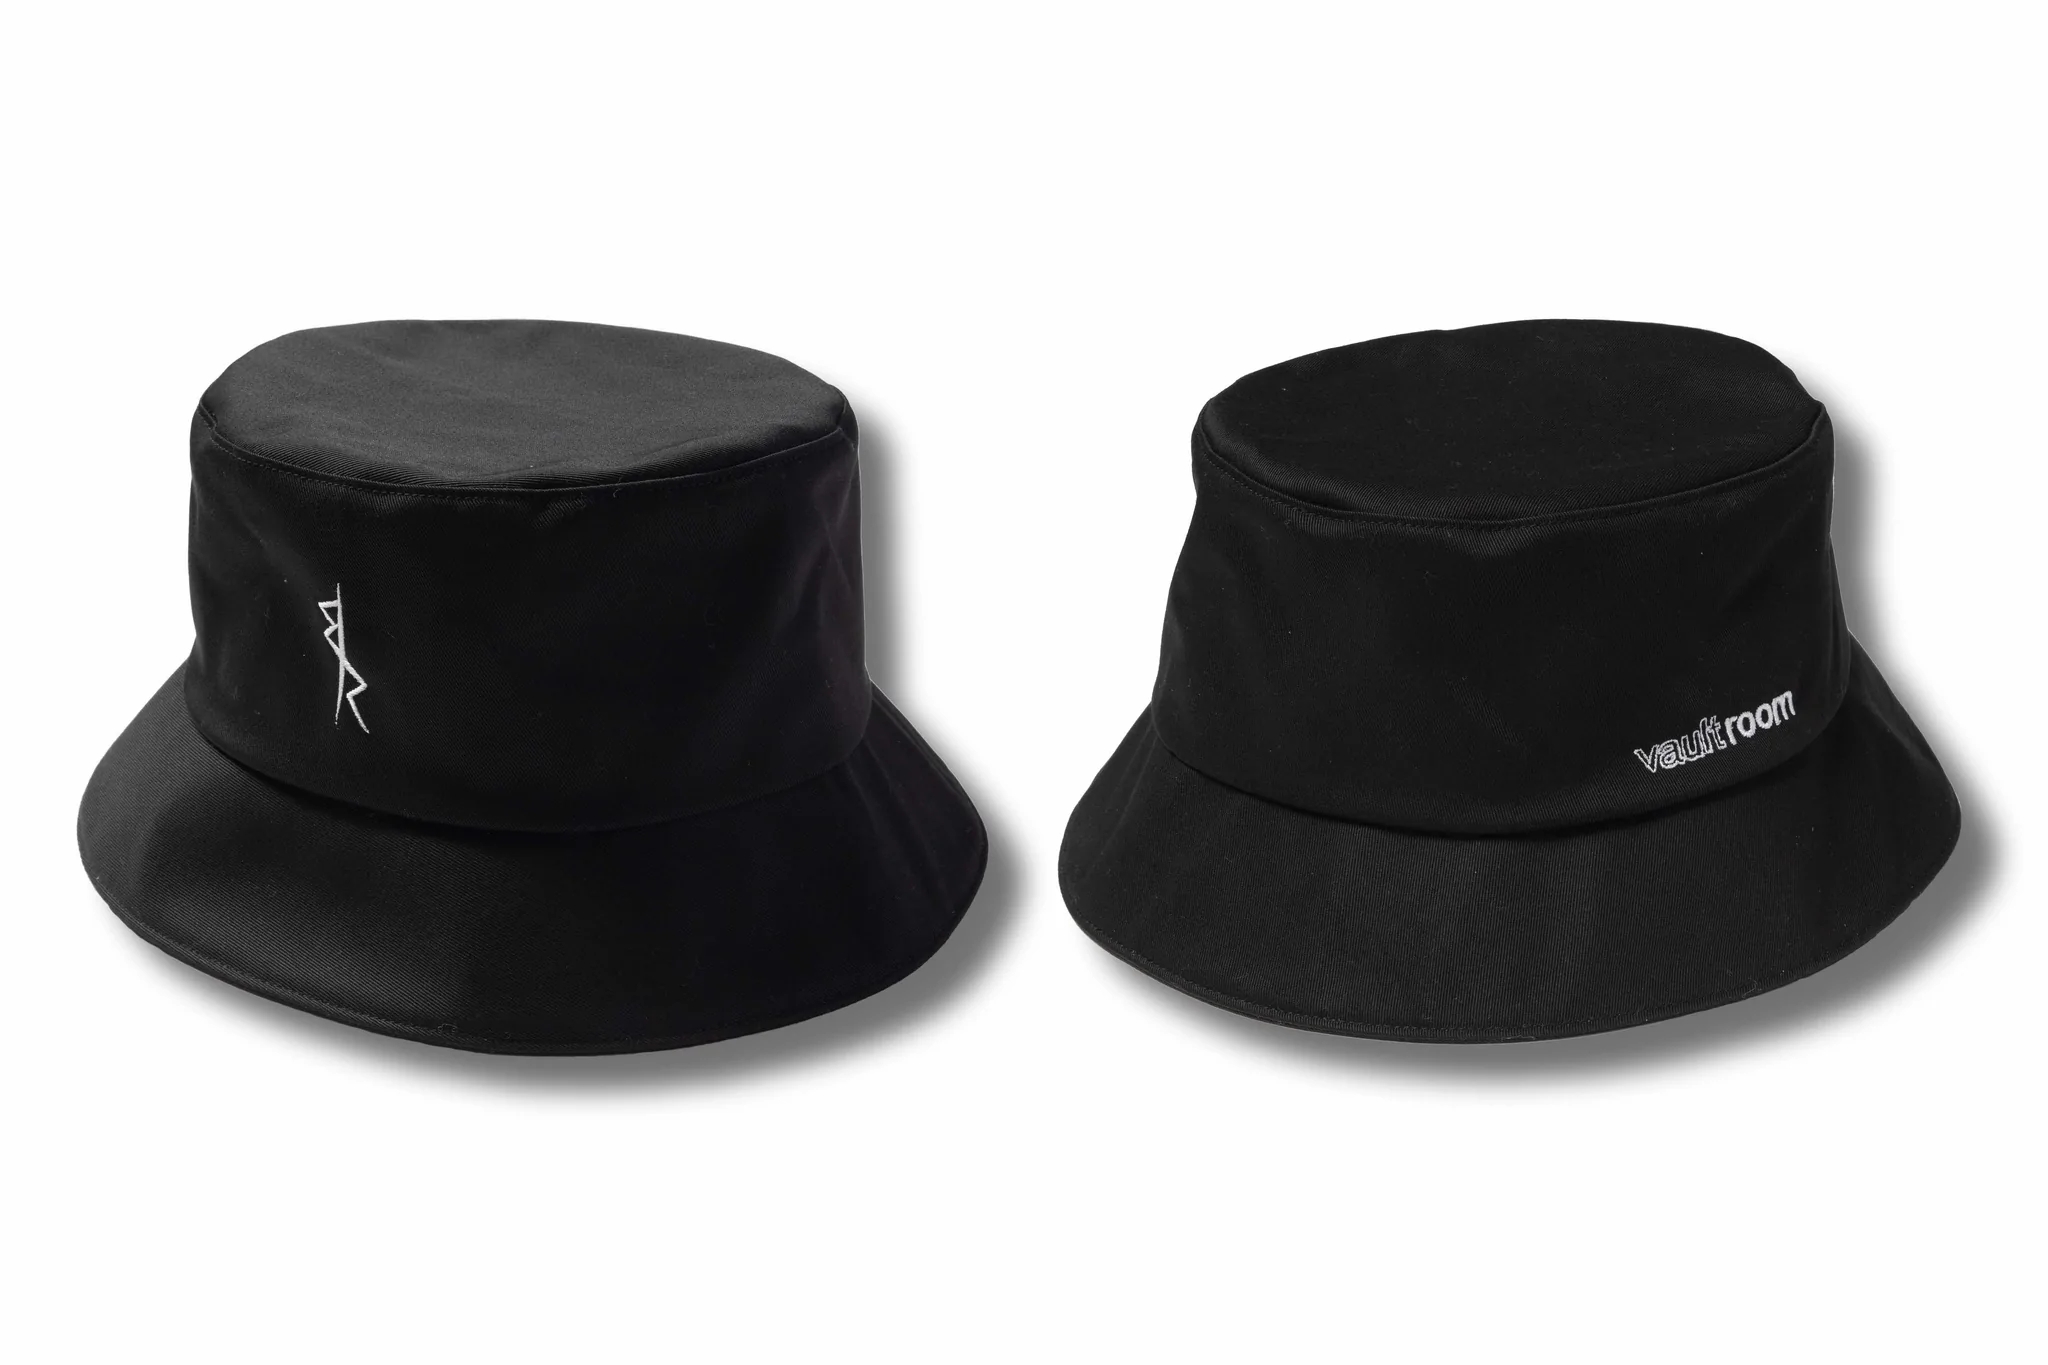 vaultroom VR × CYBERPUNK ハット - 帽子